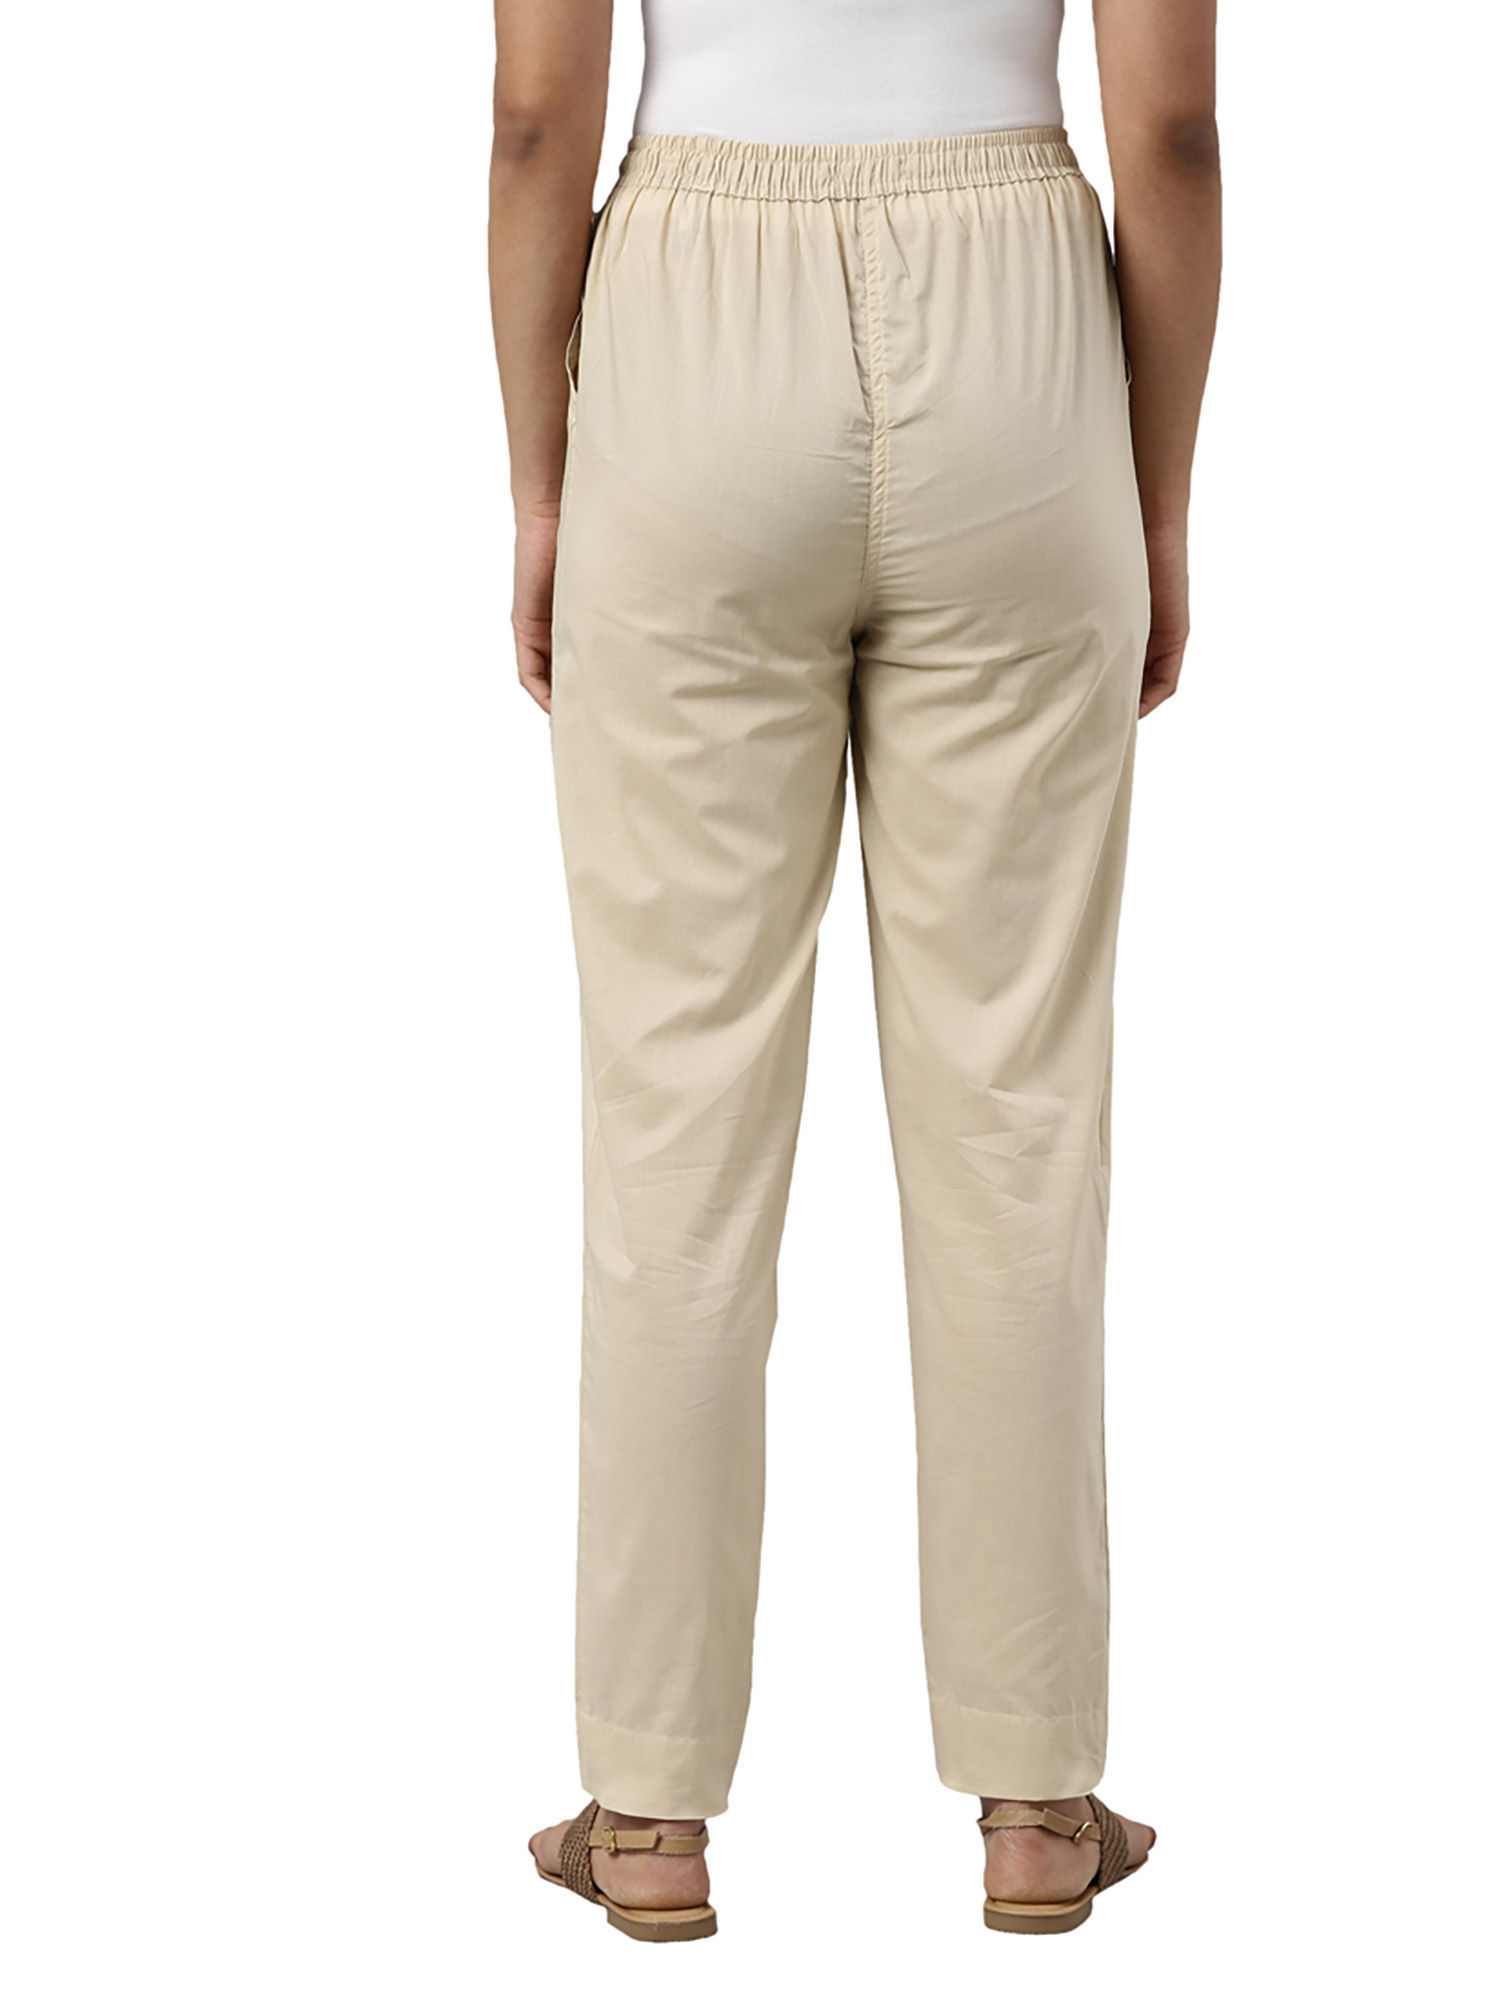 Pants for Women - Buy Straight Pants for Women Online | Soch